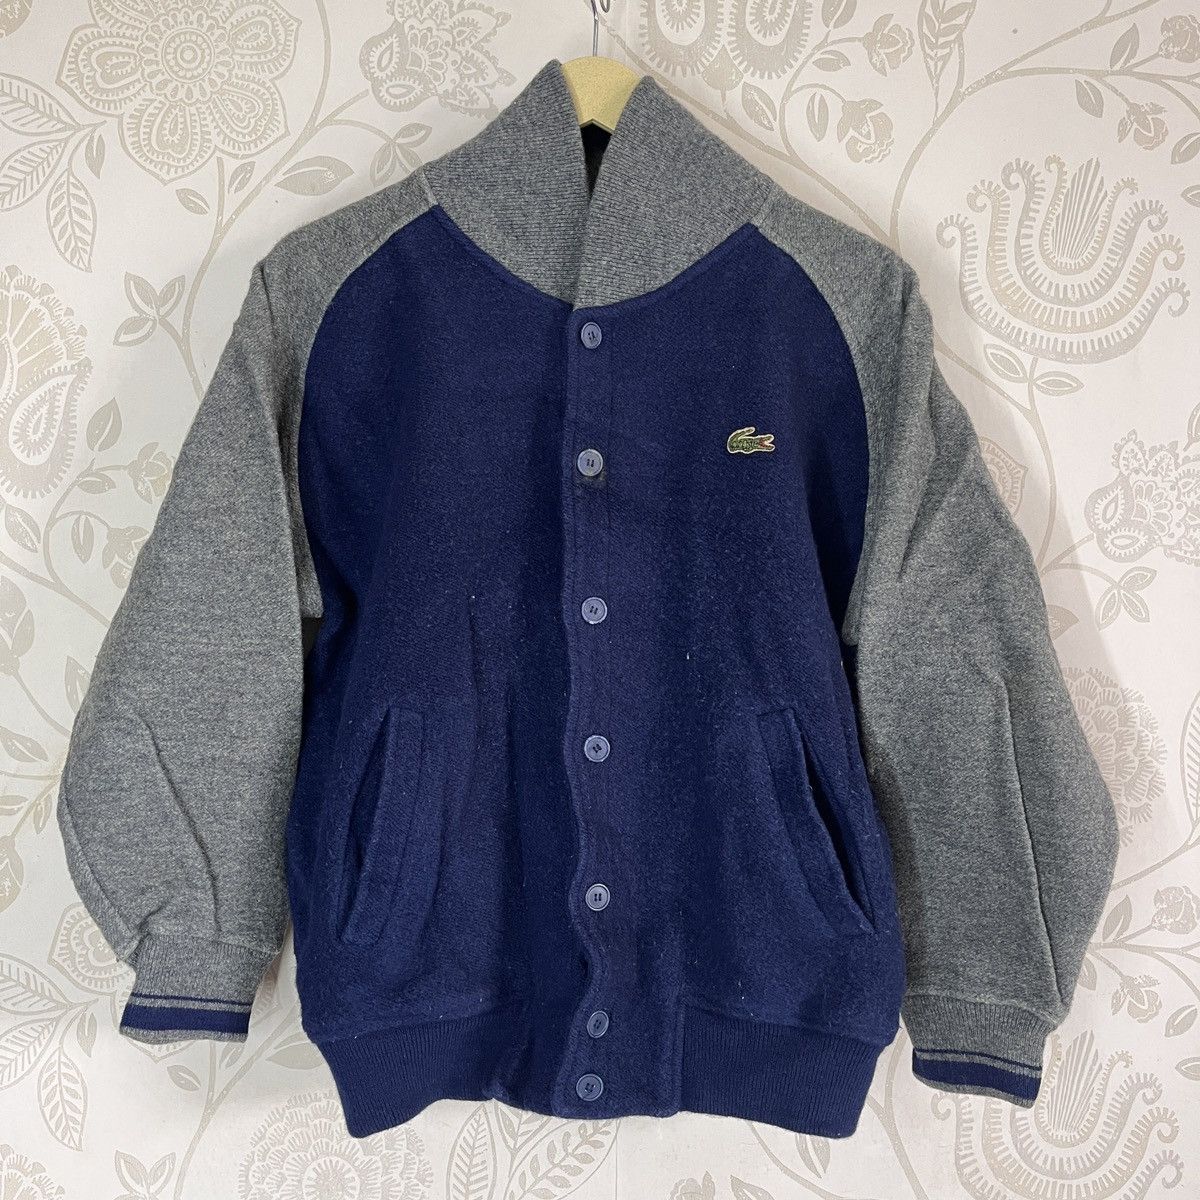 Bomber Style Jacket Lacoste Vintage 80s Sweater Japan - 1